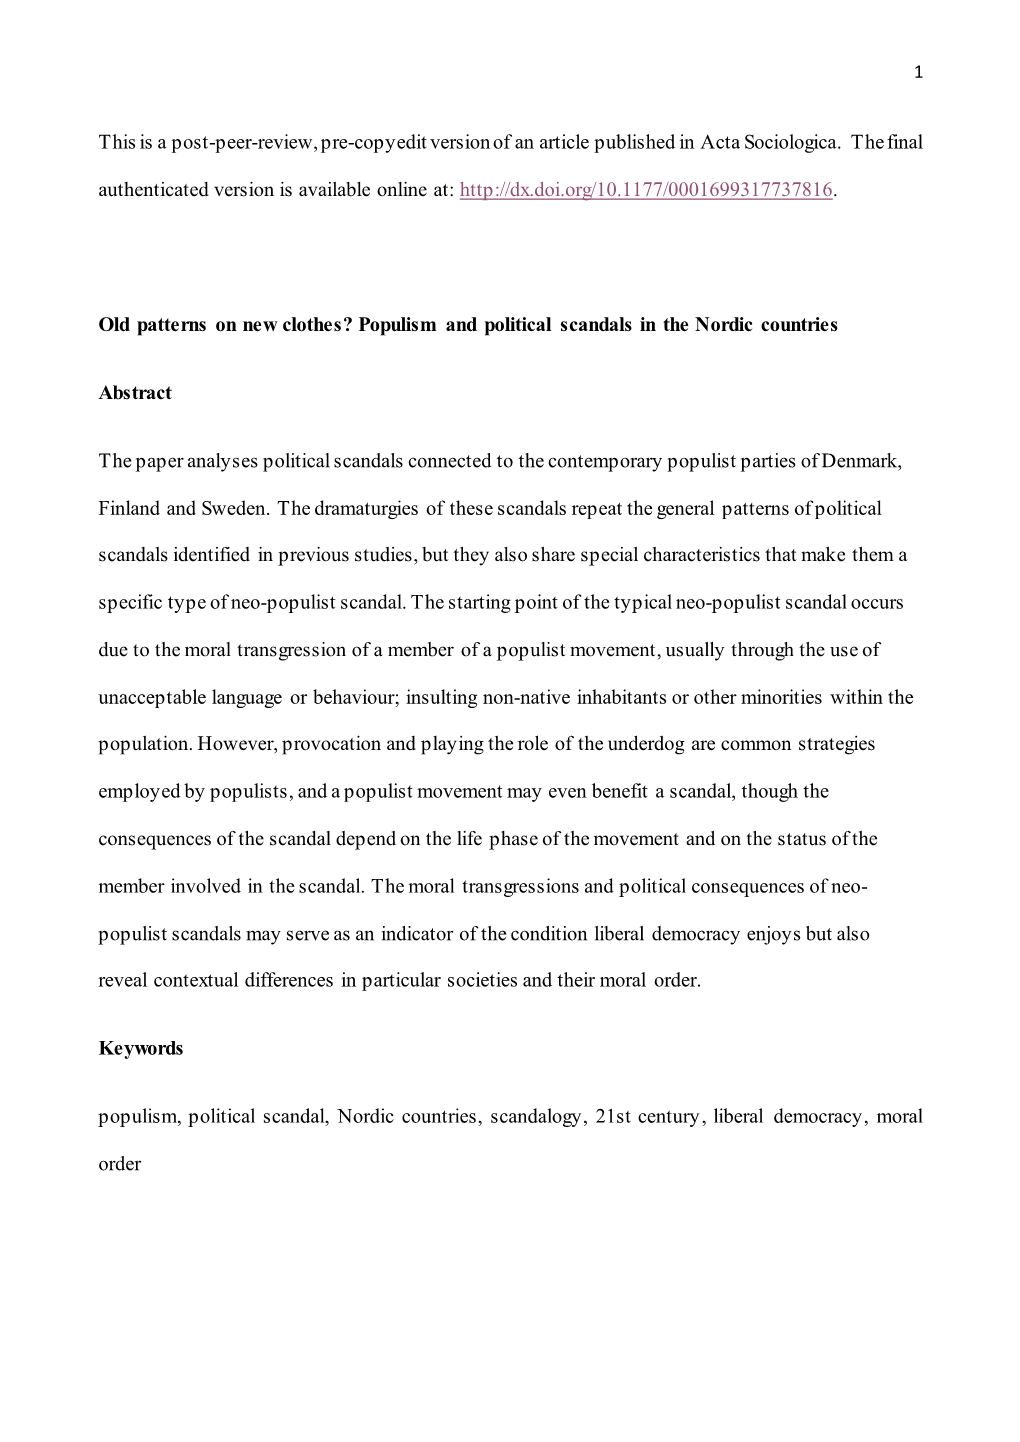 Neo-Populist-Scandal-Acta Sociologica4-Revised-1